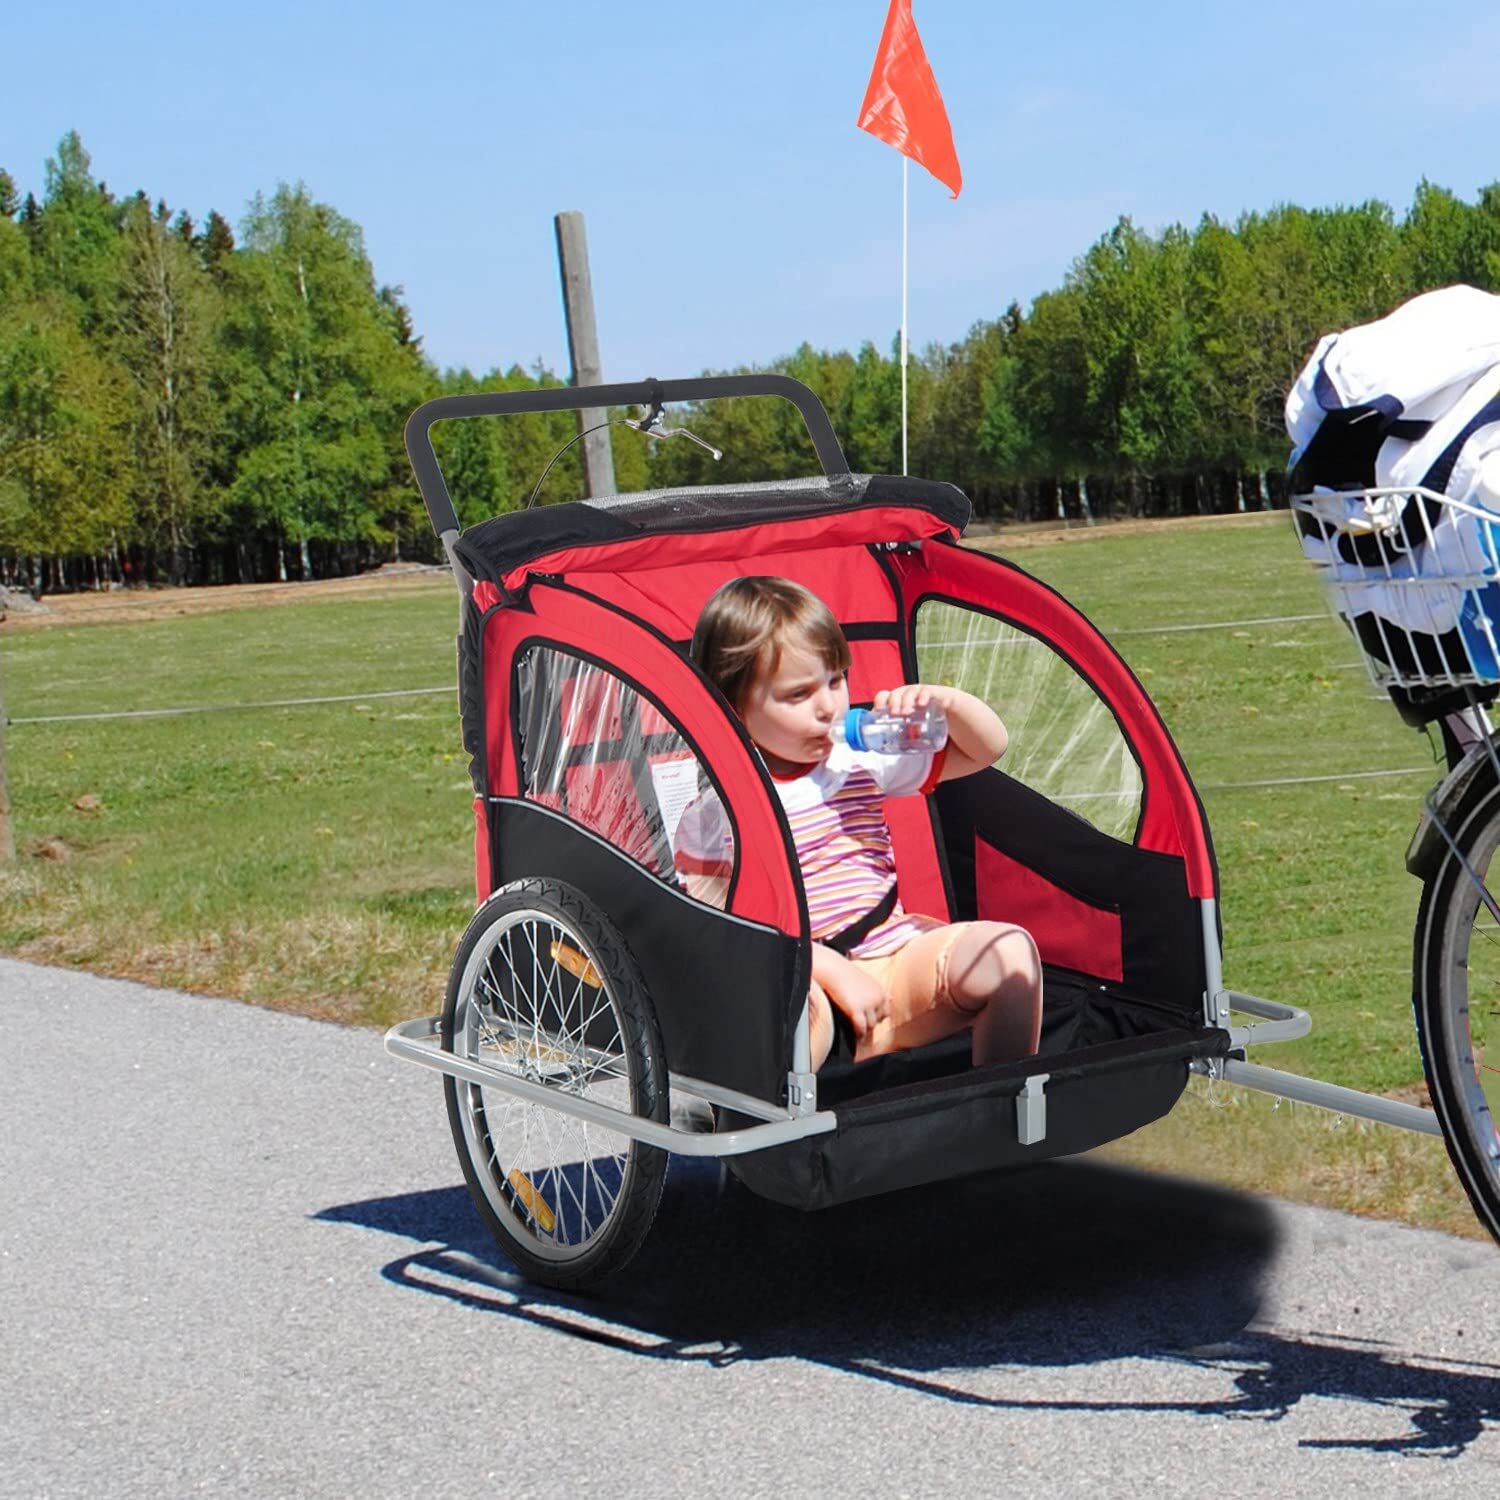 Remolque de bicicleta para niños, remolque de bicicleta con marco de acero  resistente, remolque de carga para bicicleta al aire libre, vagón de mano